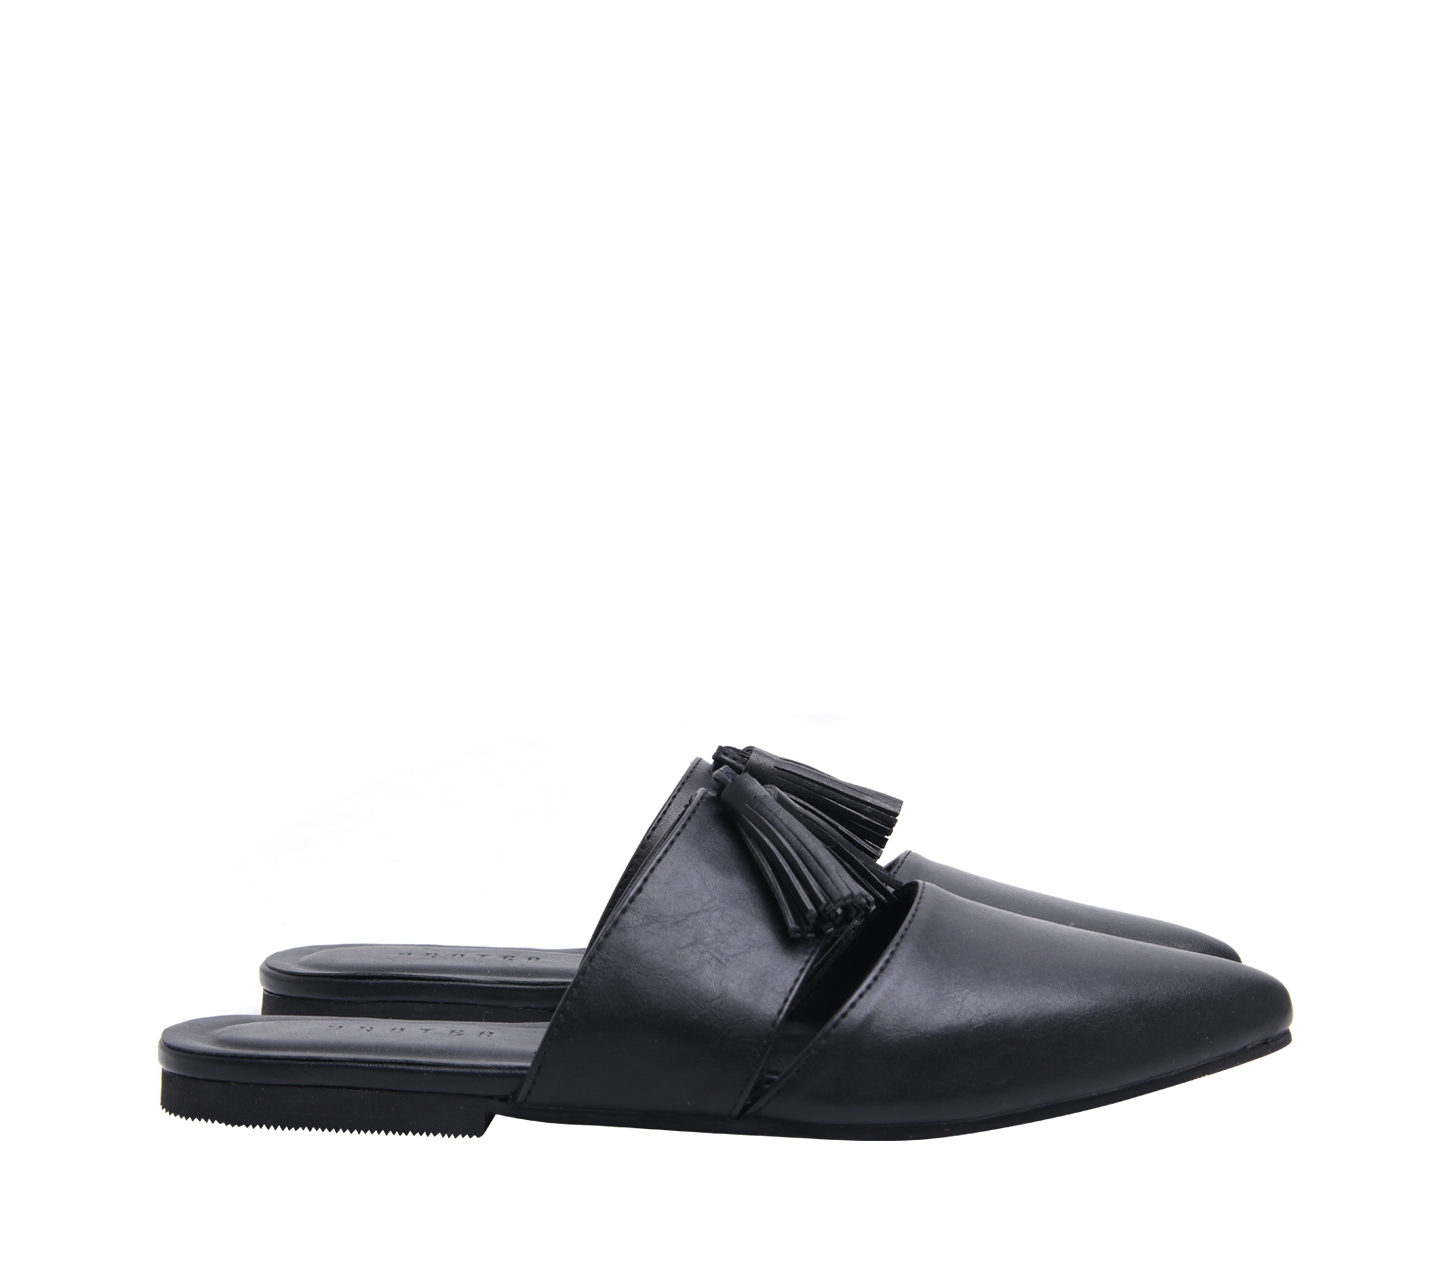 Protea Black Mules Sandals